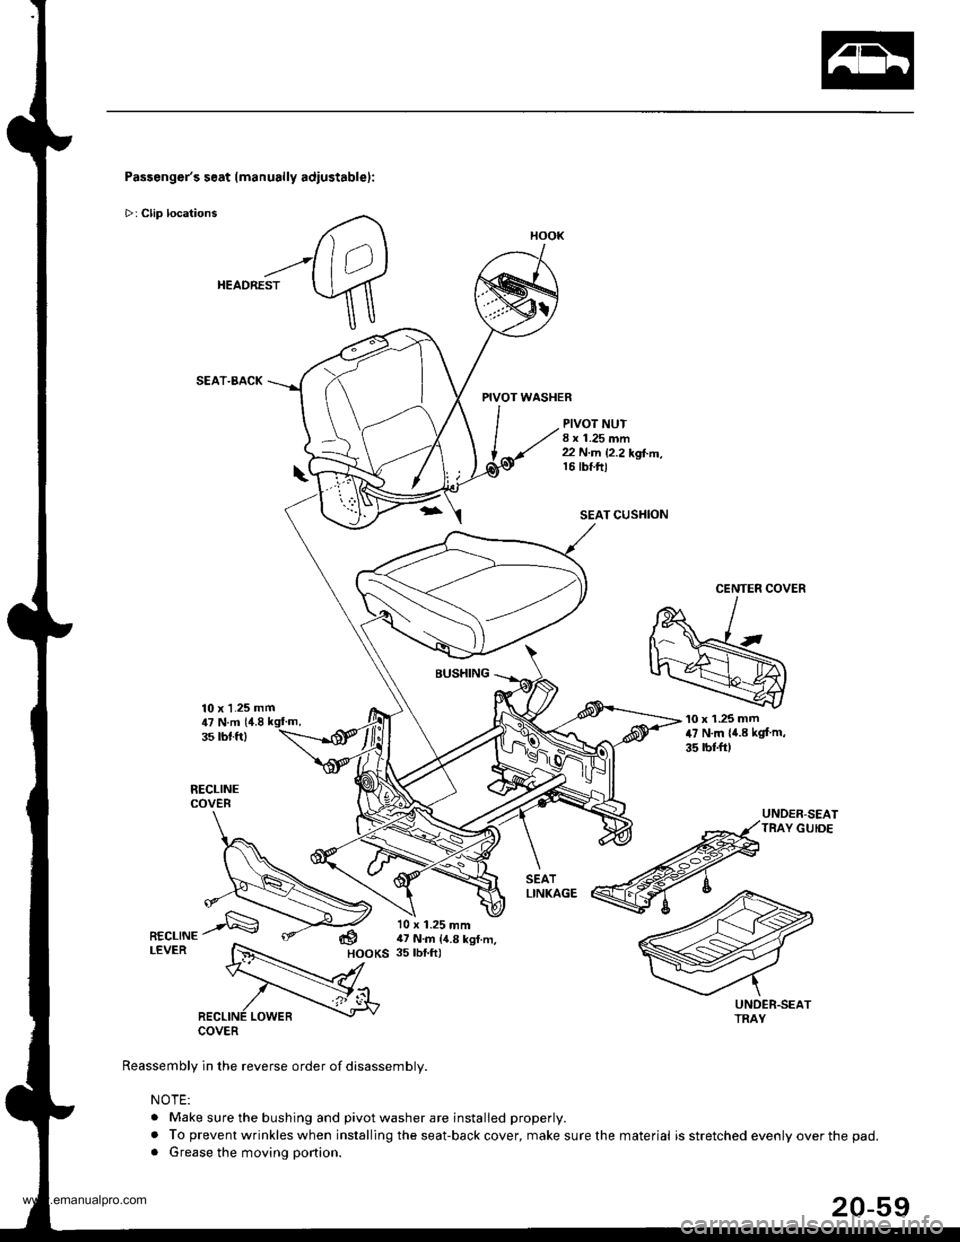 HONDA CR-V 1997 RD1-RD3 / 1.G Workshop Manual 
Passengers seat (manually adiustablel:
>: Clip locations
HEADREST
SEAT.BACK
10 x 1.25 mm
PIVOT WASHER
PIVOT NUT8 x 1.25 mm22 N.m 12.2 kgl..n,16 tbt.ftl
SEAT CUSHION
CENTER COVER
BUSHING
COVER
Reasse